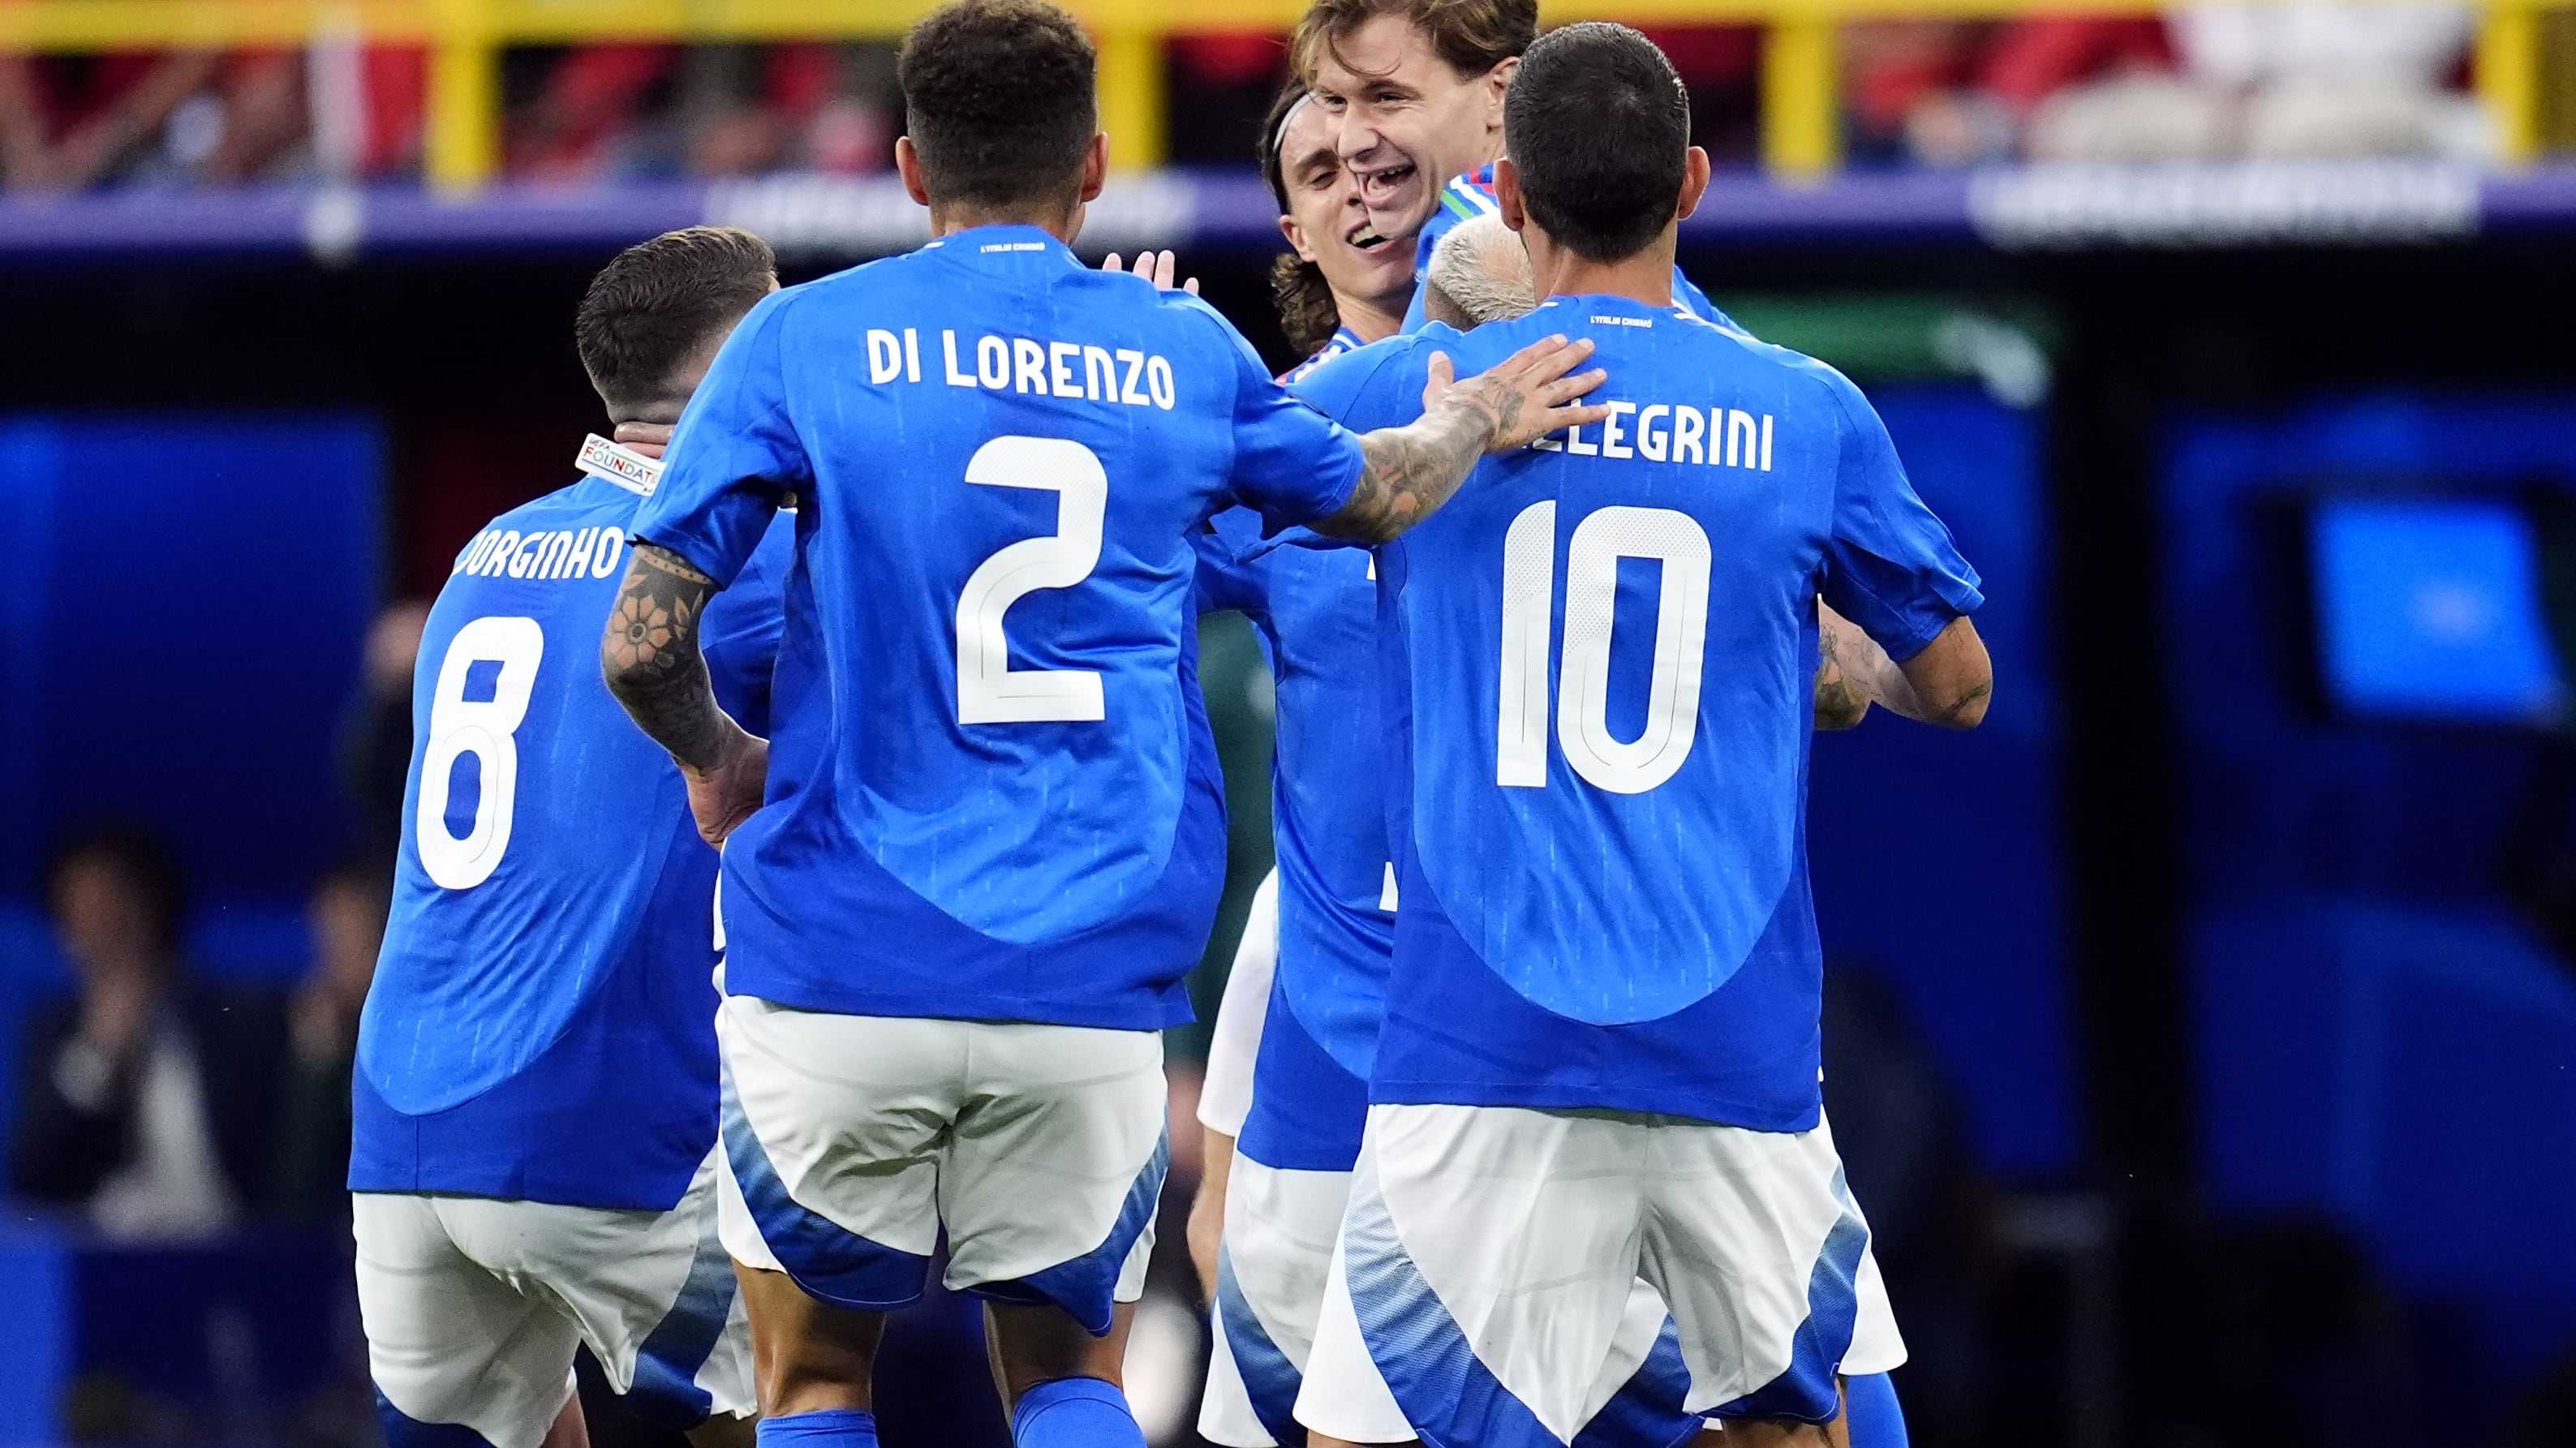 Nicolo Barella scored Italy’s winning goal against Albania